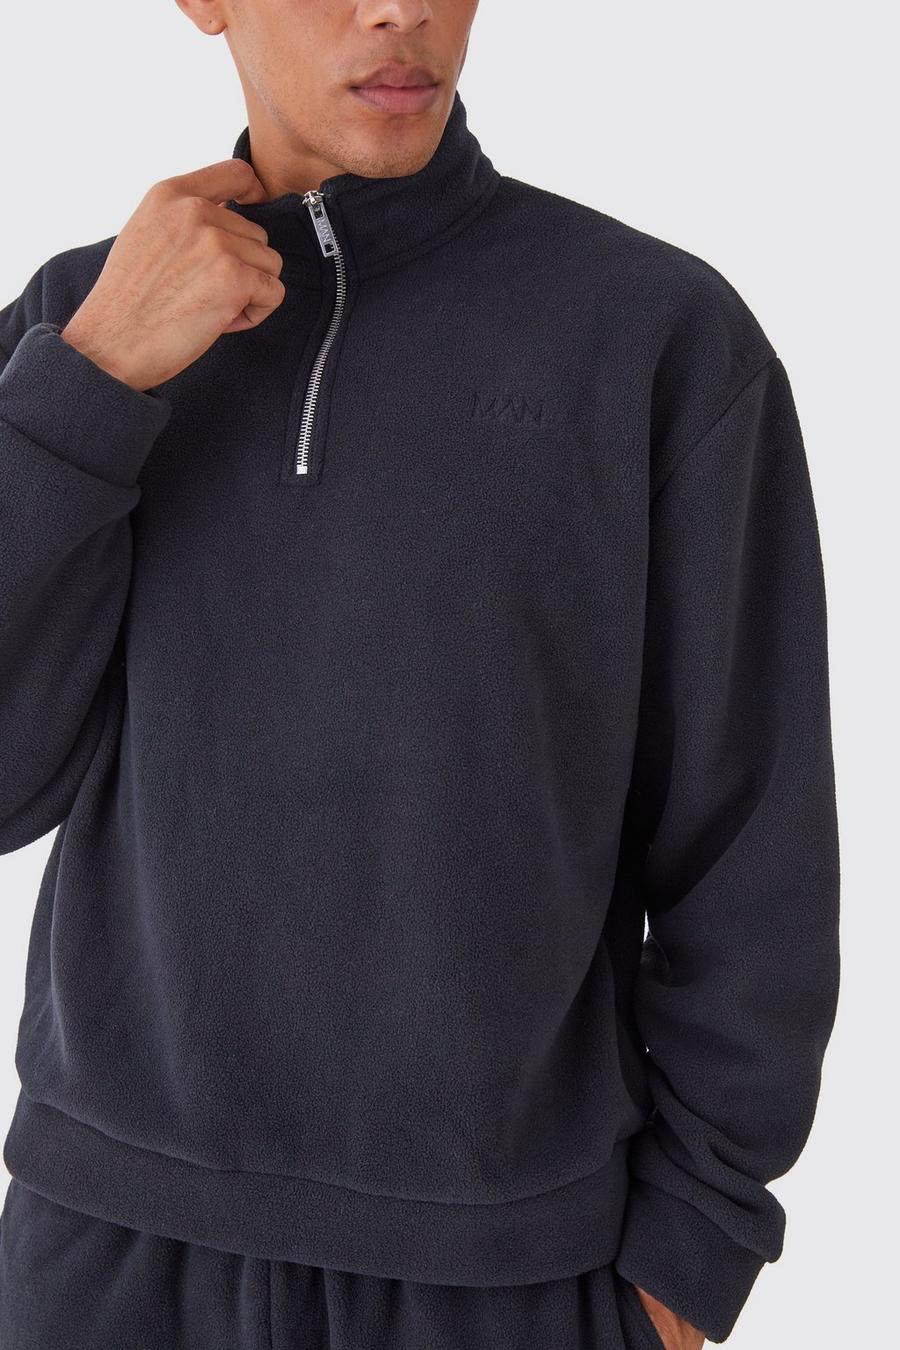 Kastiges Oversize Microfleece Man Sweatshirt mit 1/4 Reißverschluss, Black